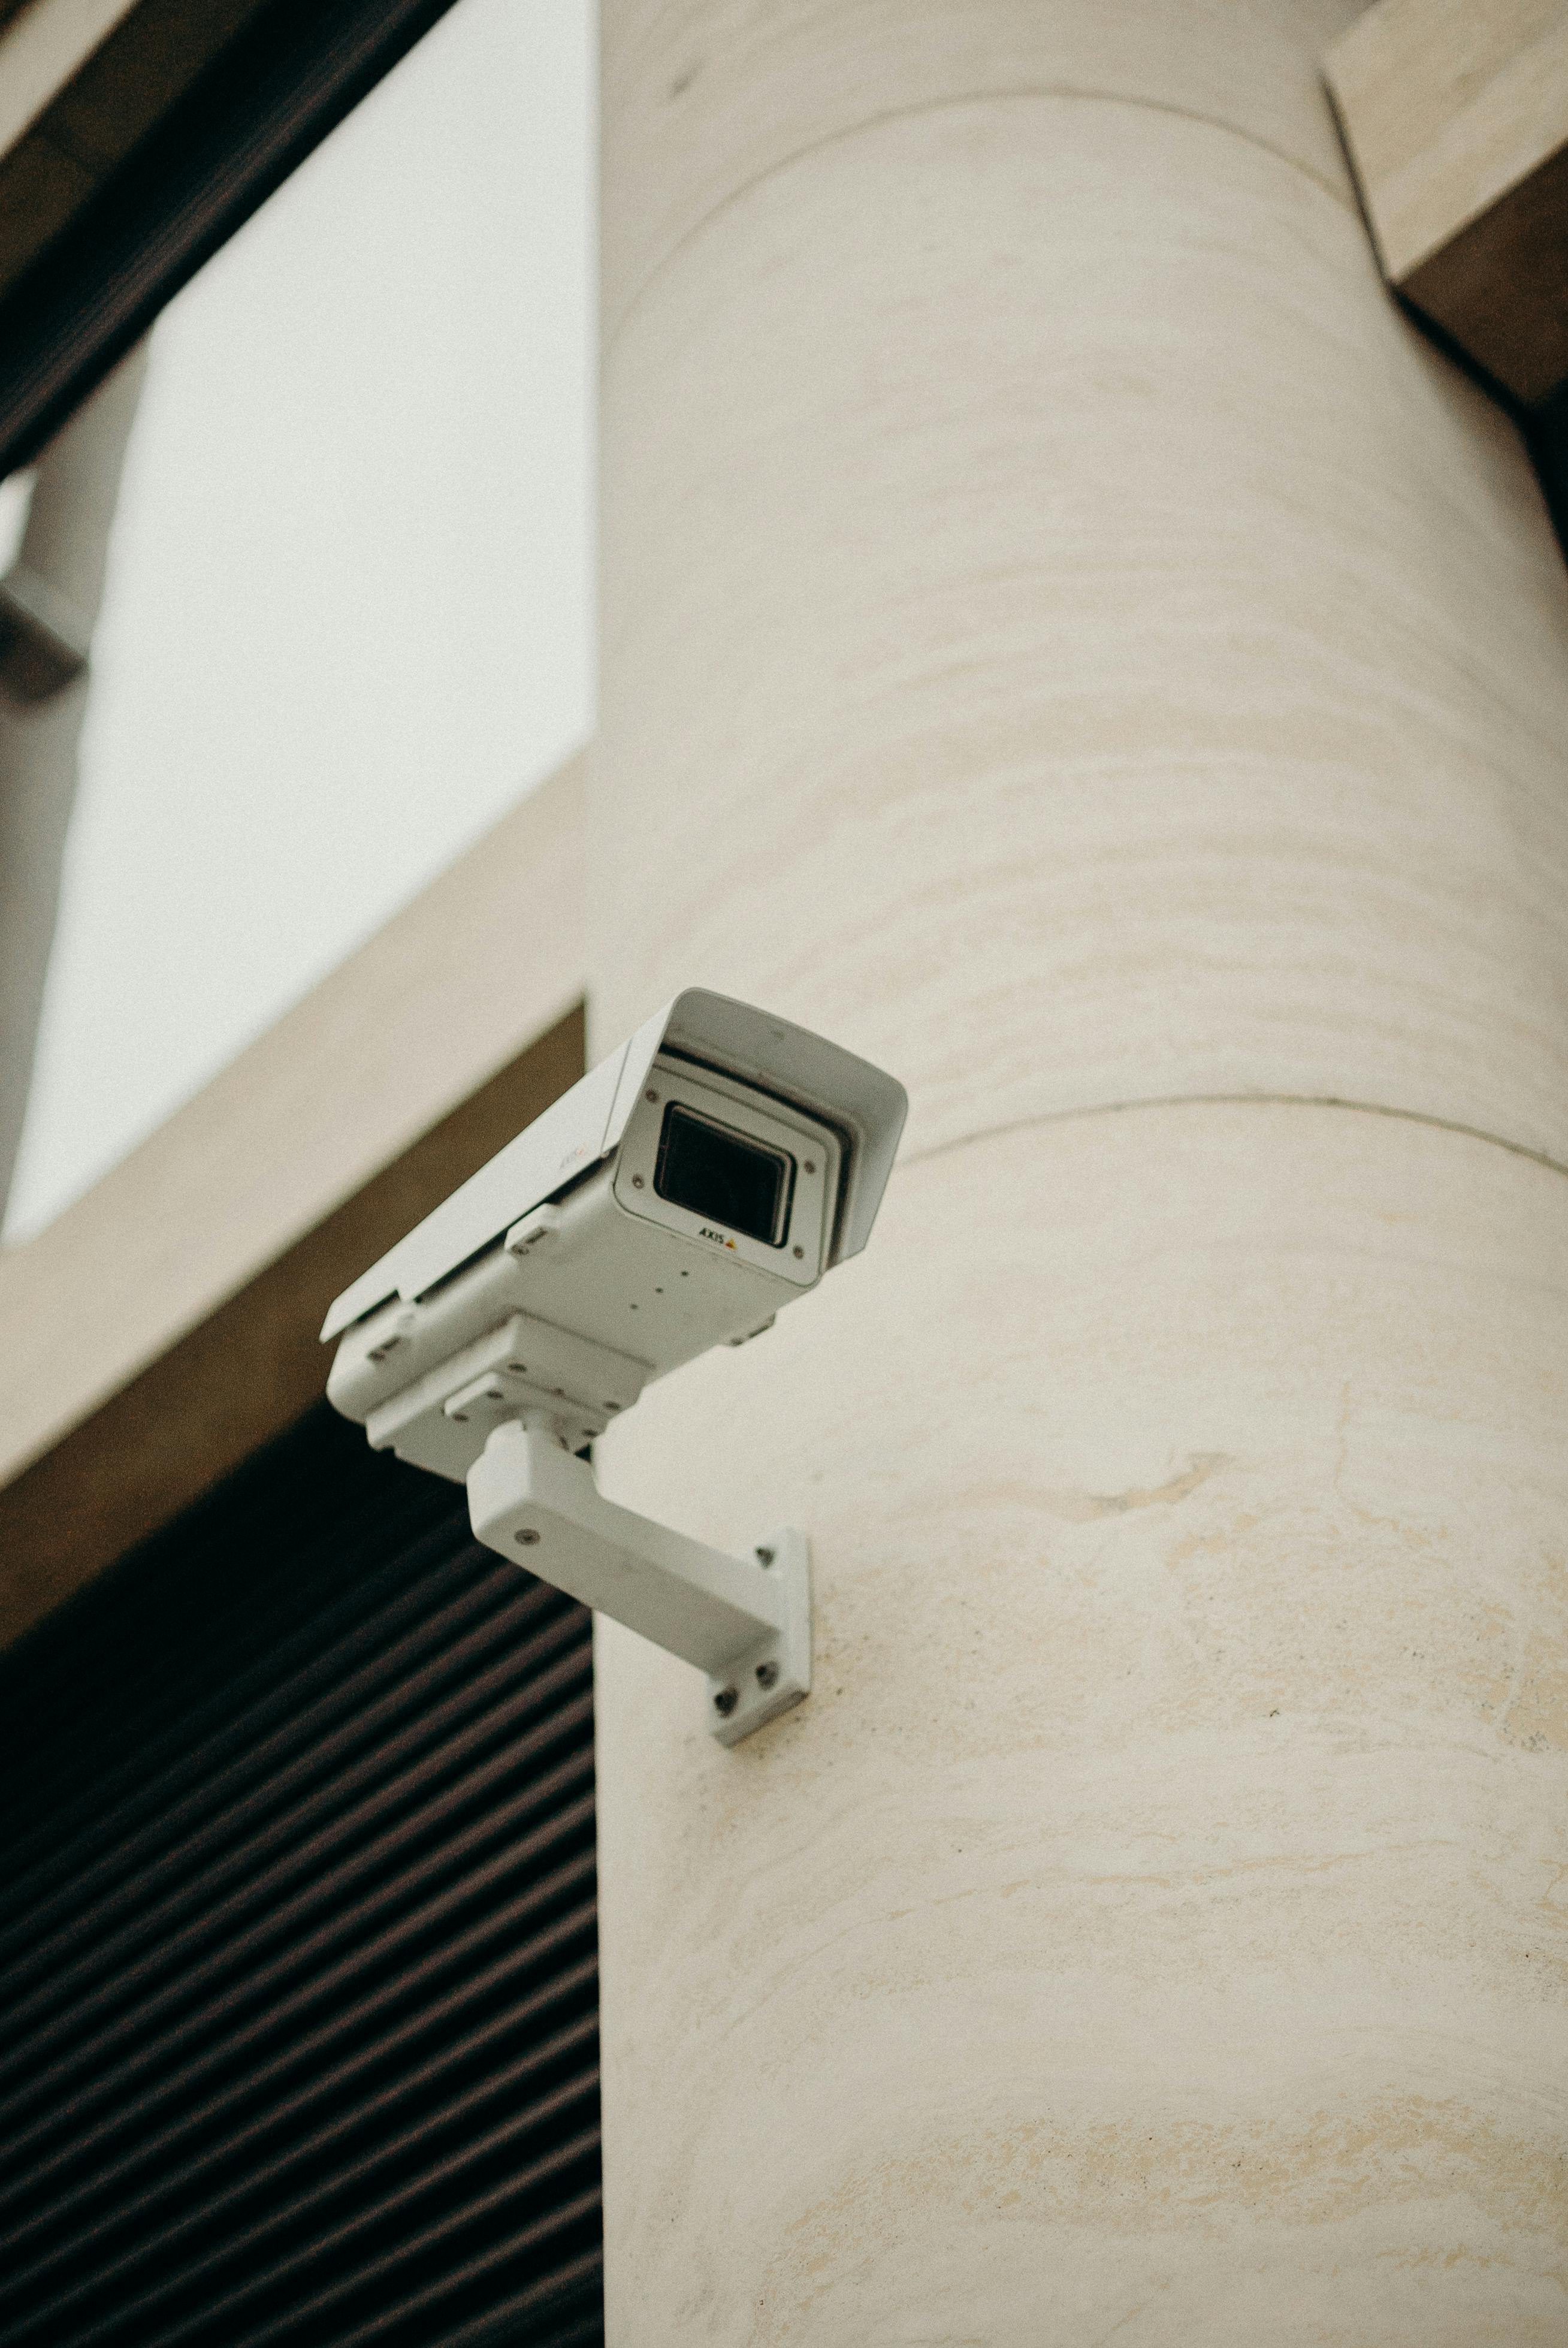 Security camera | Source: Pexels